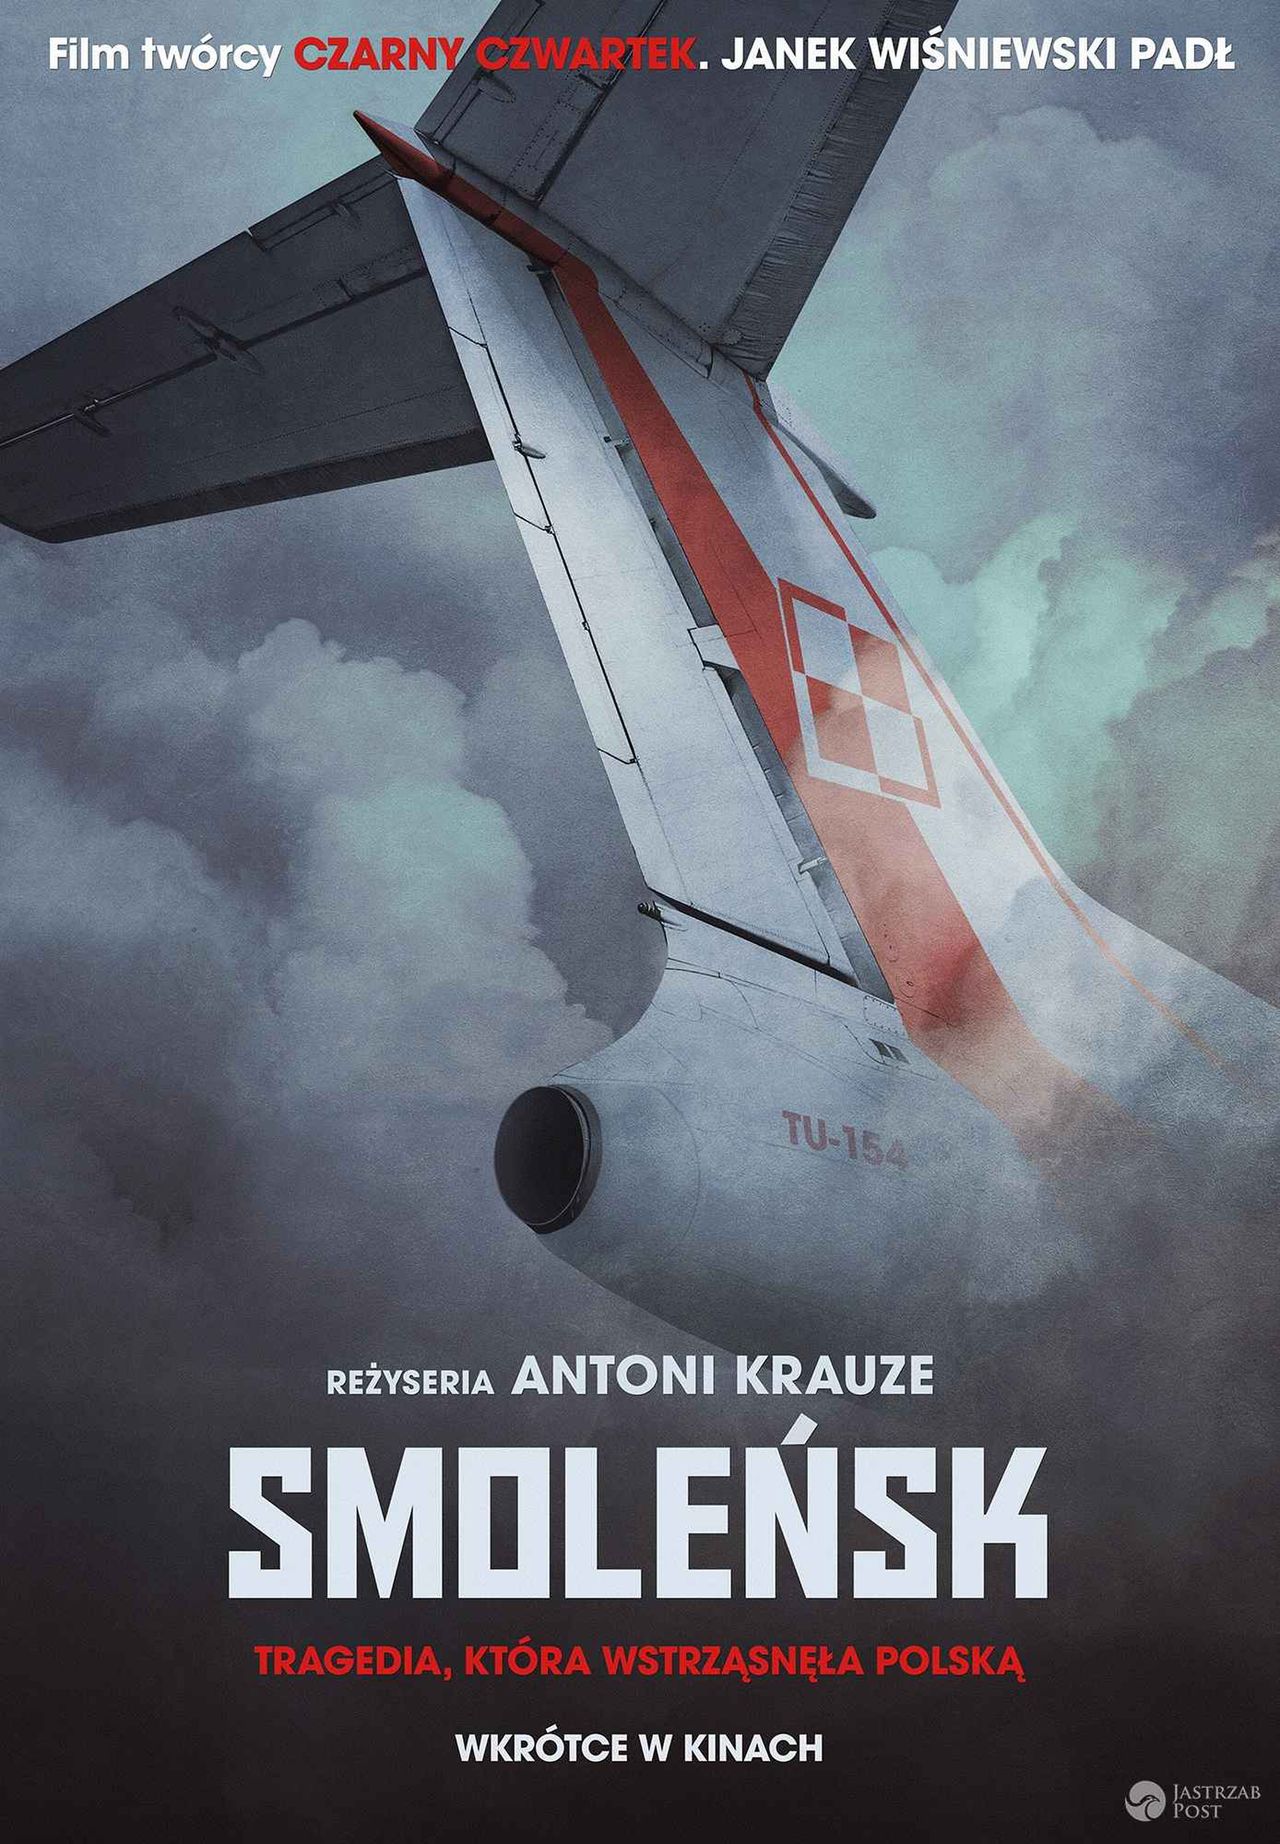 Film Smoleńsk - trailer, zwiastun, fragmenty